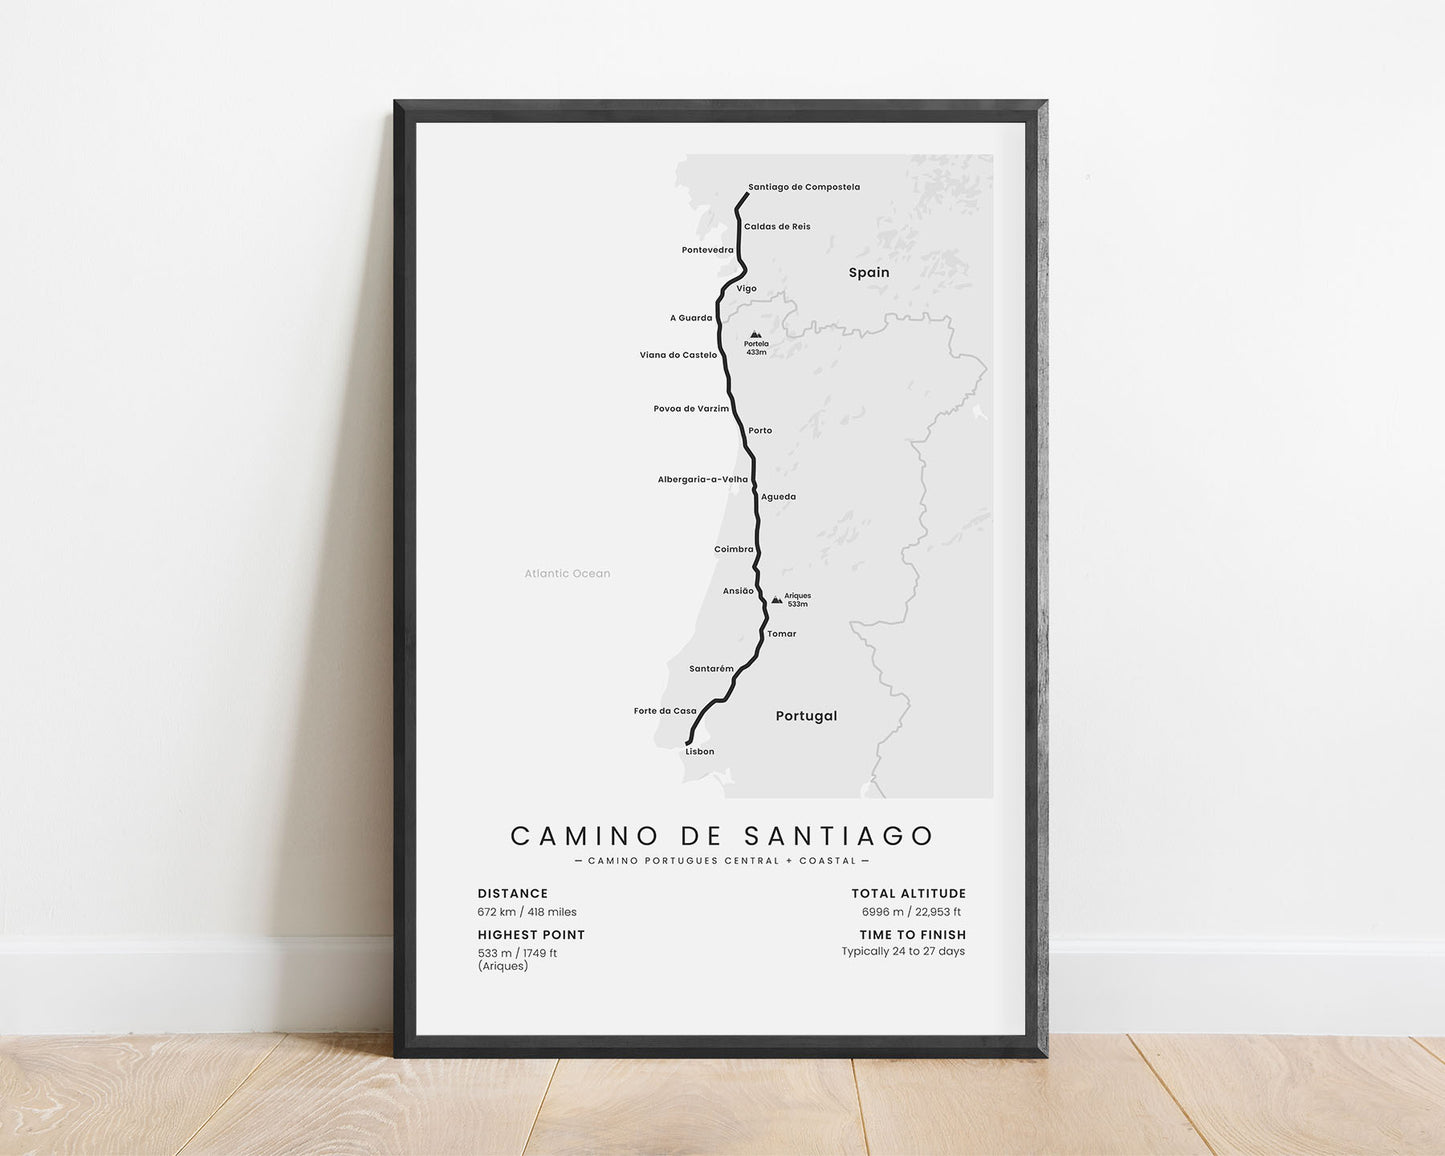 Camino Portugues Central + Coastal (Lisbon to Porto to Santiago de Compostela) pilgrimage print with white background